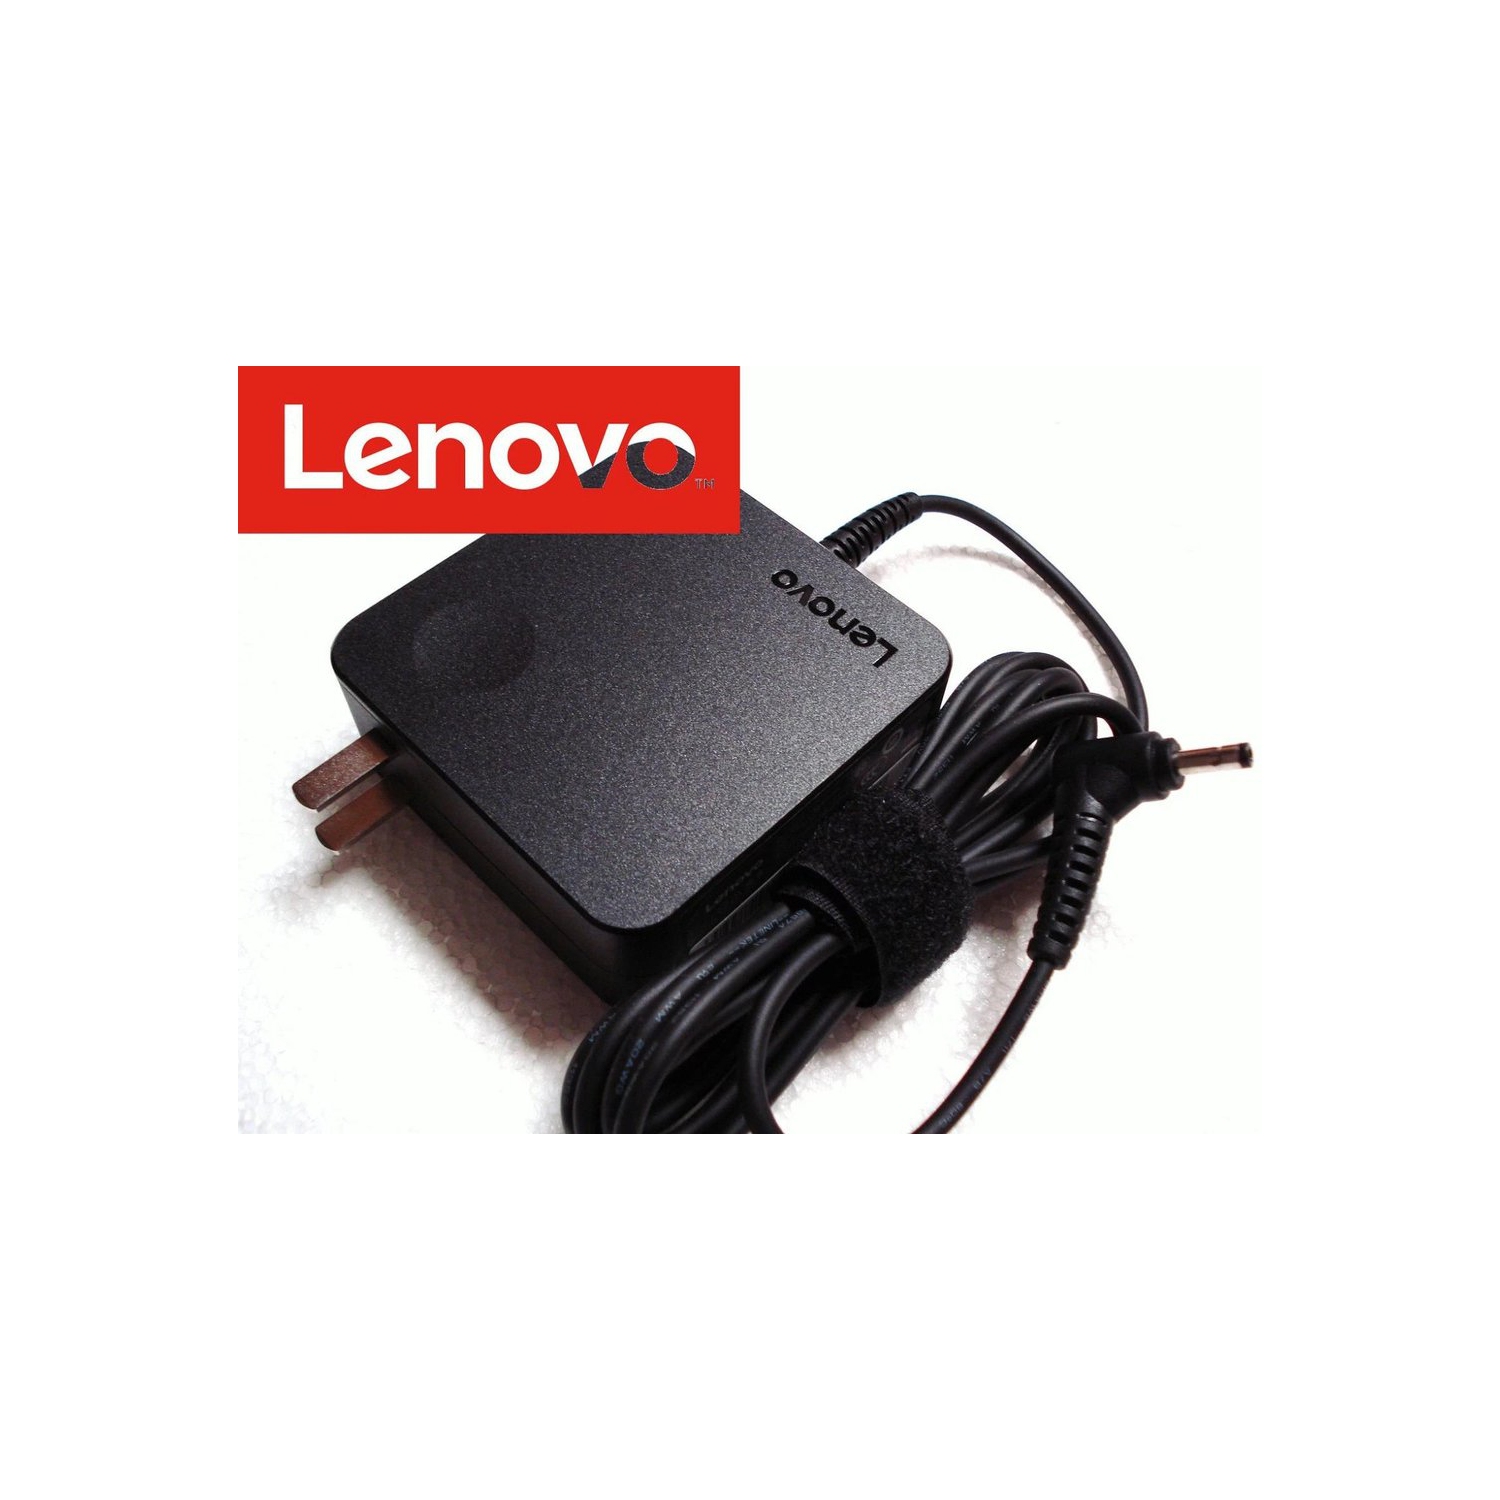 New Genuine 20V 3.25A 65W 4.0x1.7mm AC Power Adapter for Lenovo IdeaPad 710s 510s 510 310 110 100 100s / Yoga 710 510 310 / Flex 4 Series Laptops